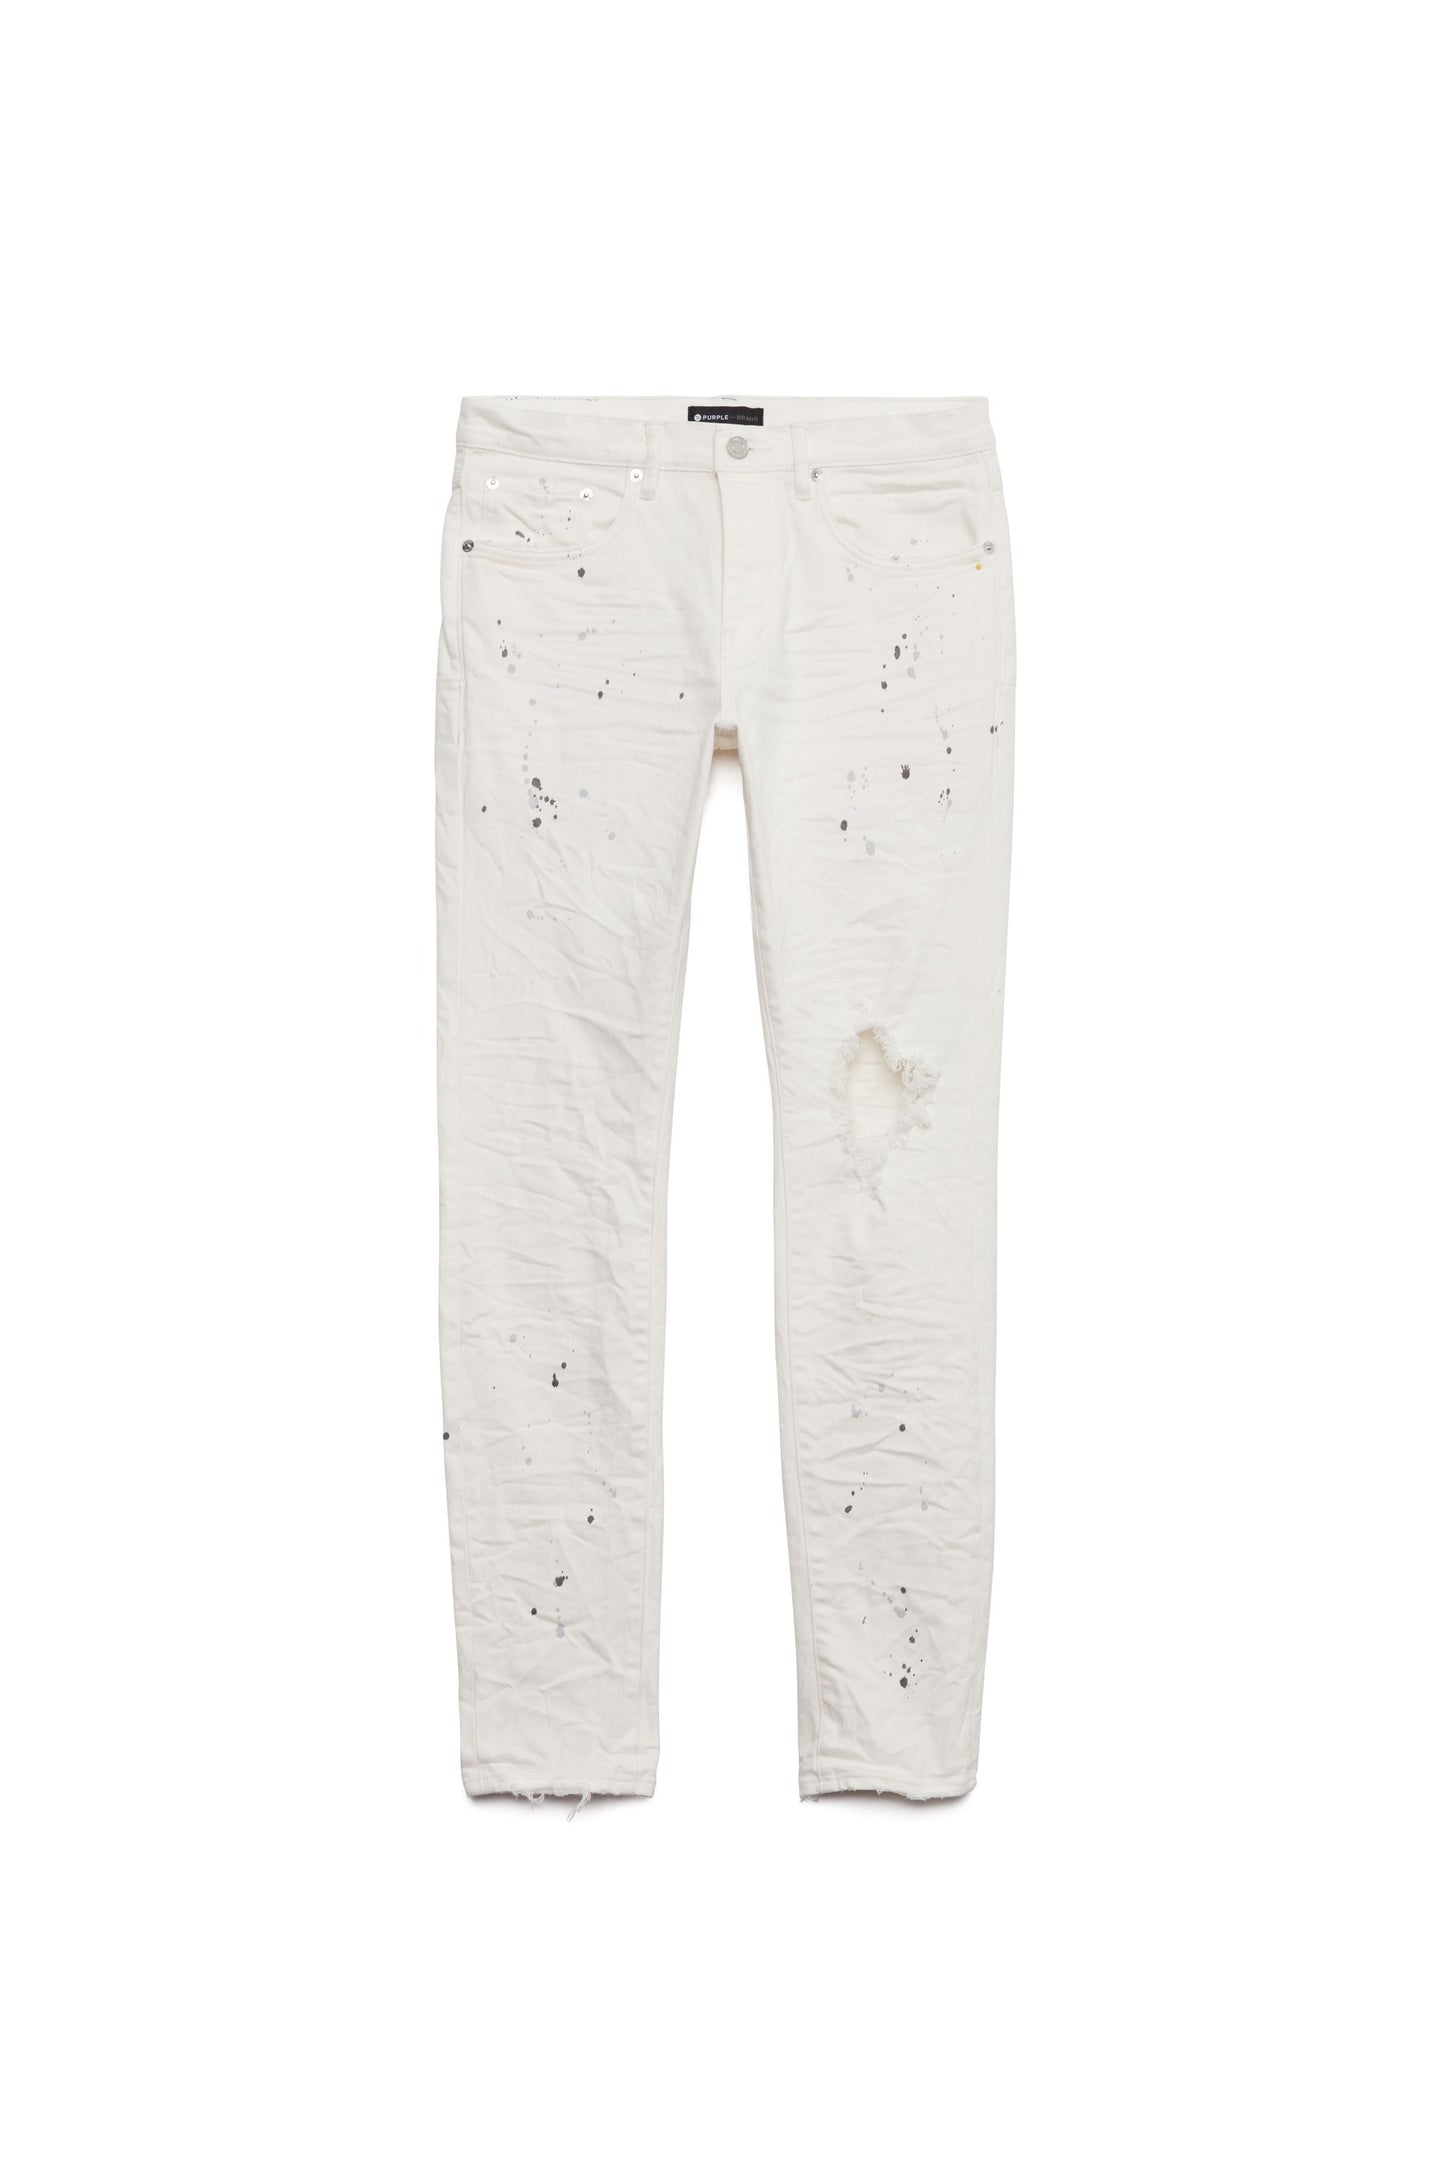 PURPLE BRAND - Men's Denim Jean - Low Rise Skinny - Style No. P001 - Optic White Paint Blowout - Front